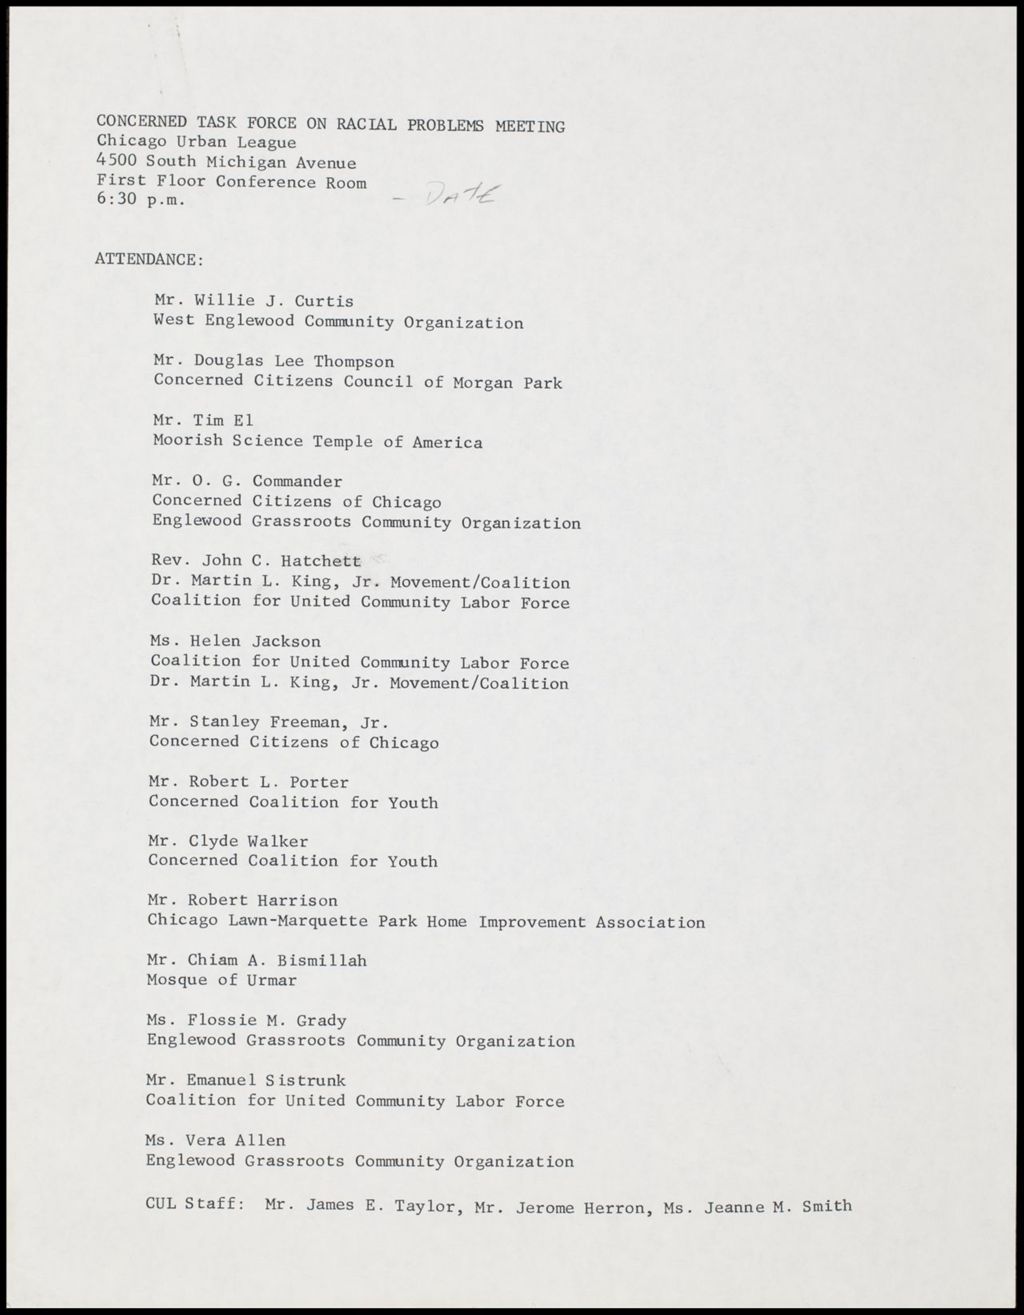 Miniature of Task Force on Racial Problems, 1976 (Folder II-2262)